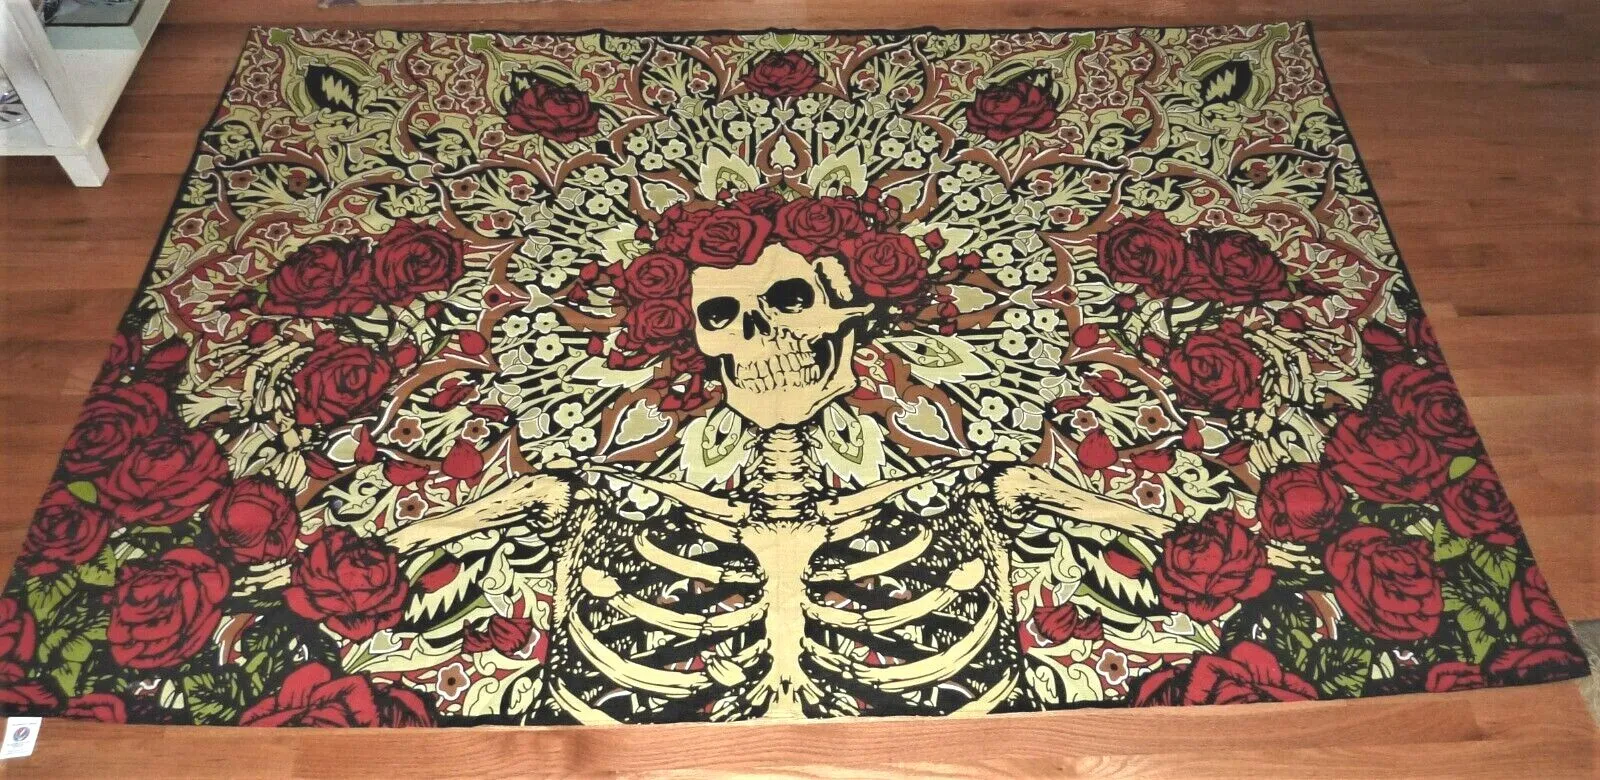 Grateful Dead Skull & Roses Tapestry Surreal Entertainment License 60x90"